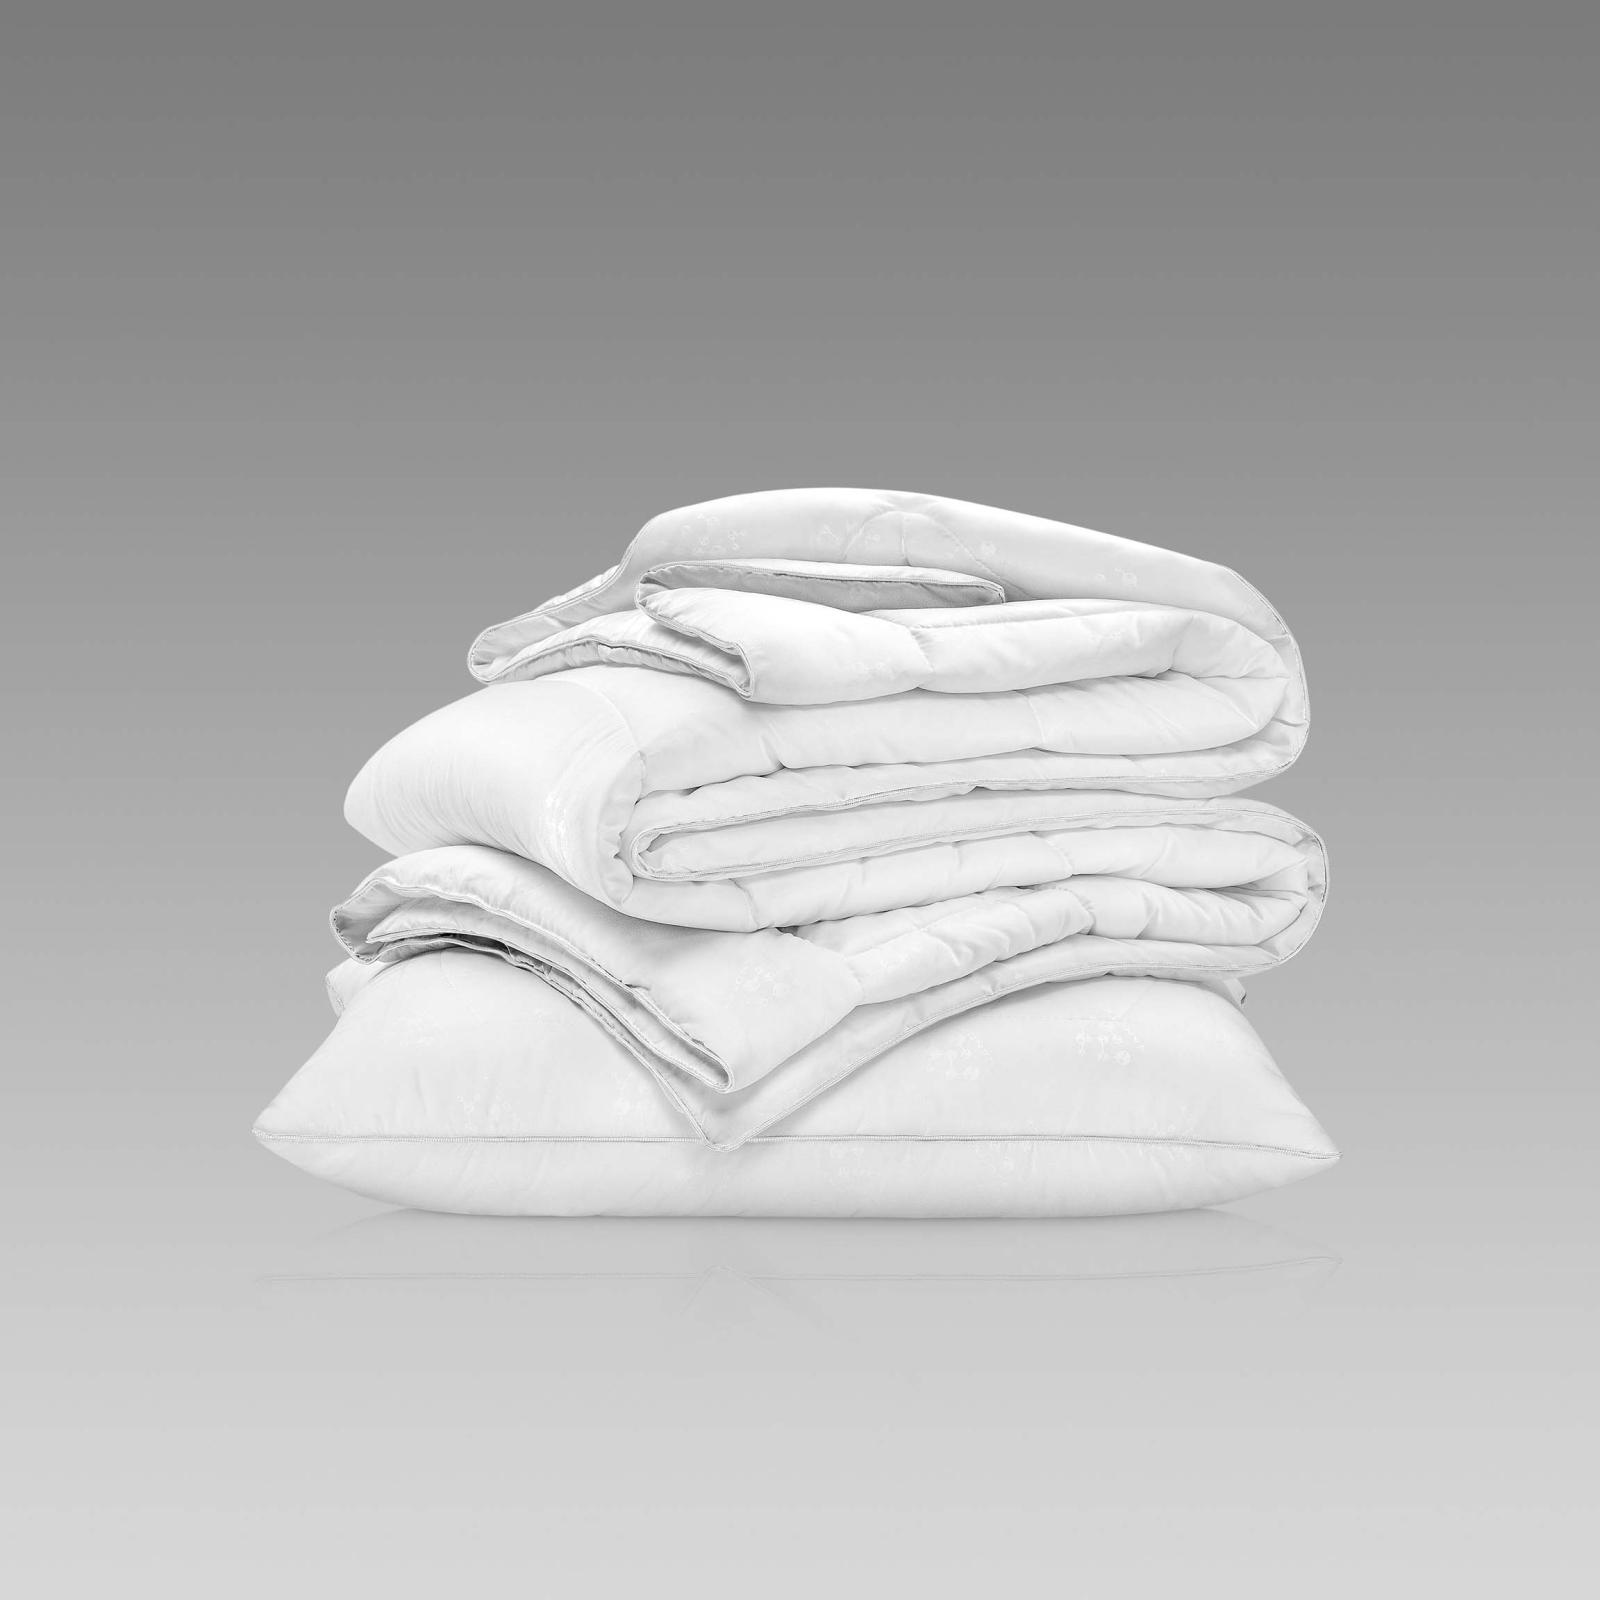 Одеяло Гелиос 200х210 Togas, цвет белый, размер 200х210 см - фото 7